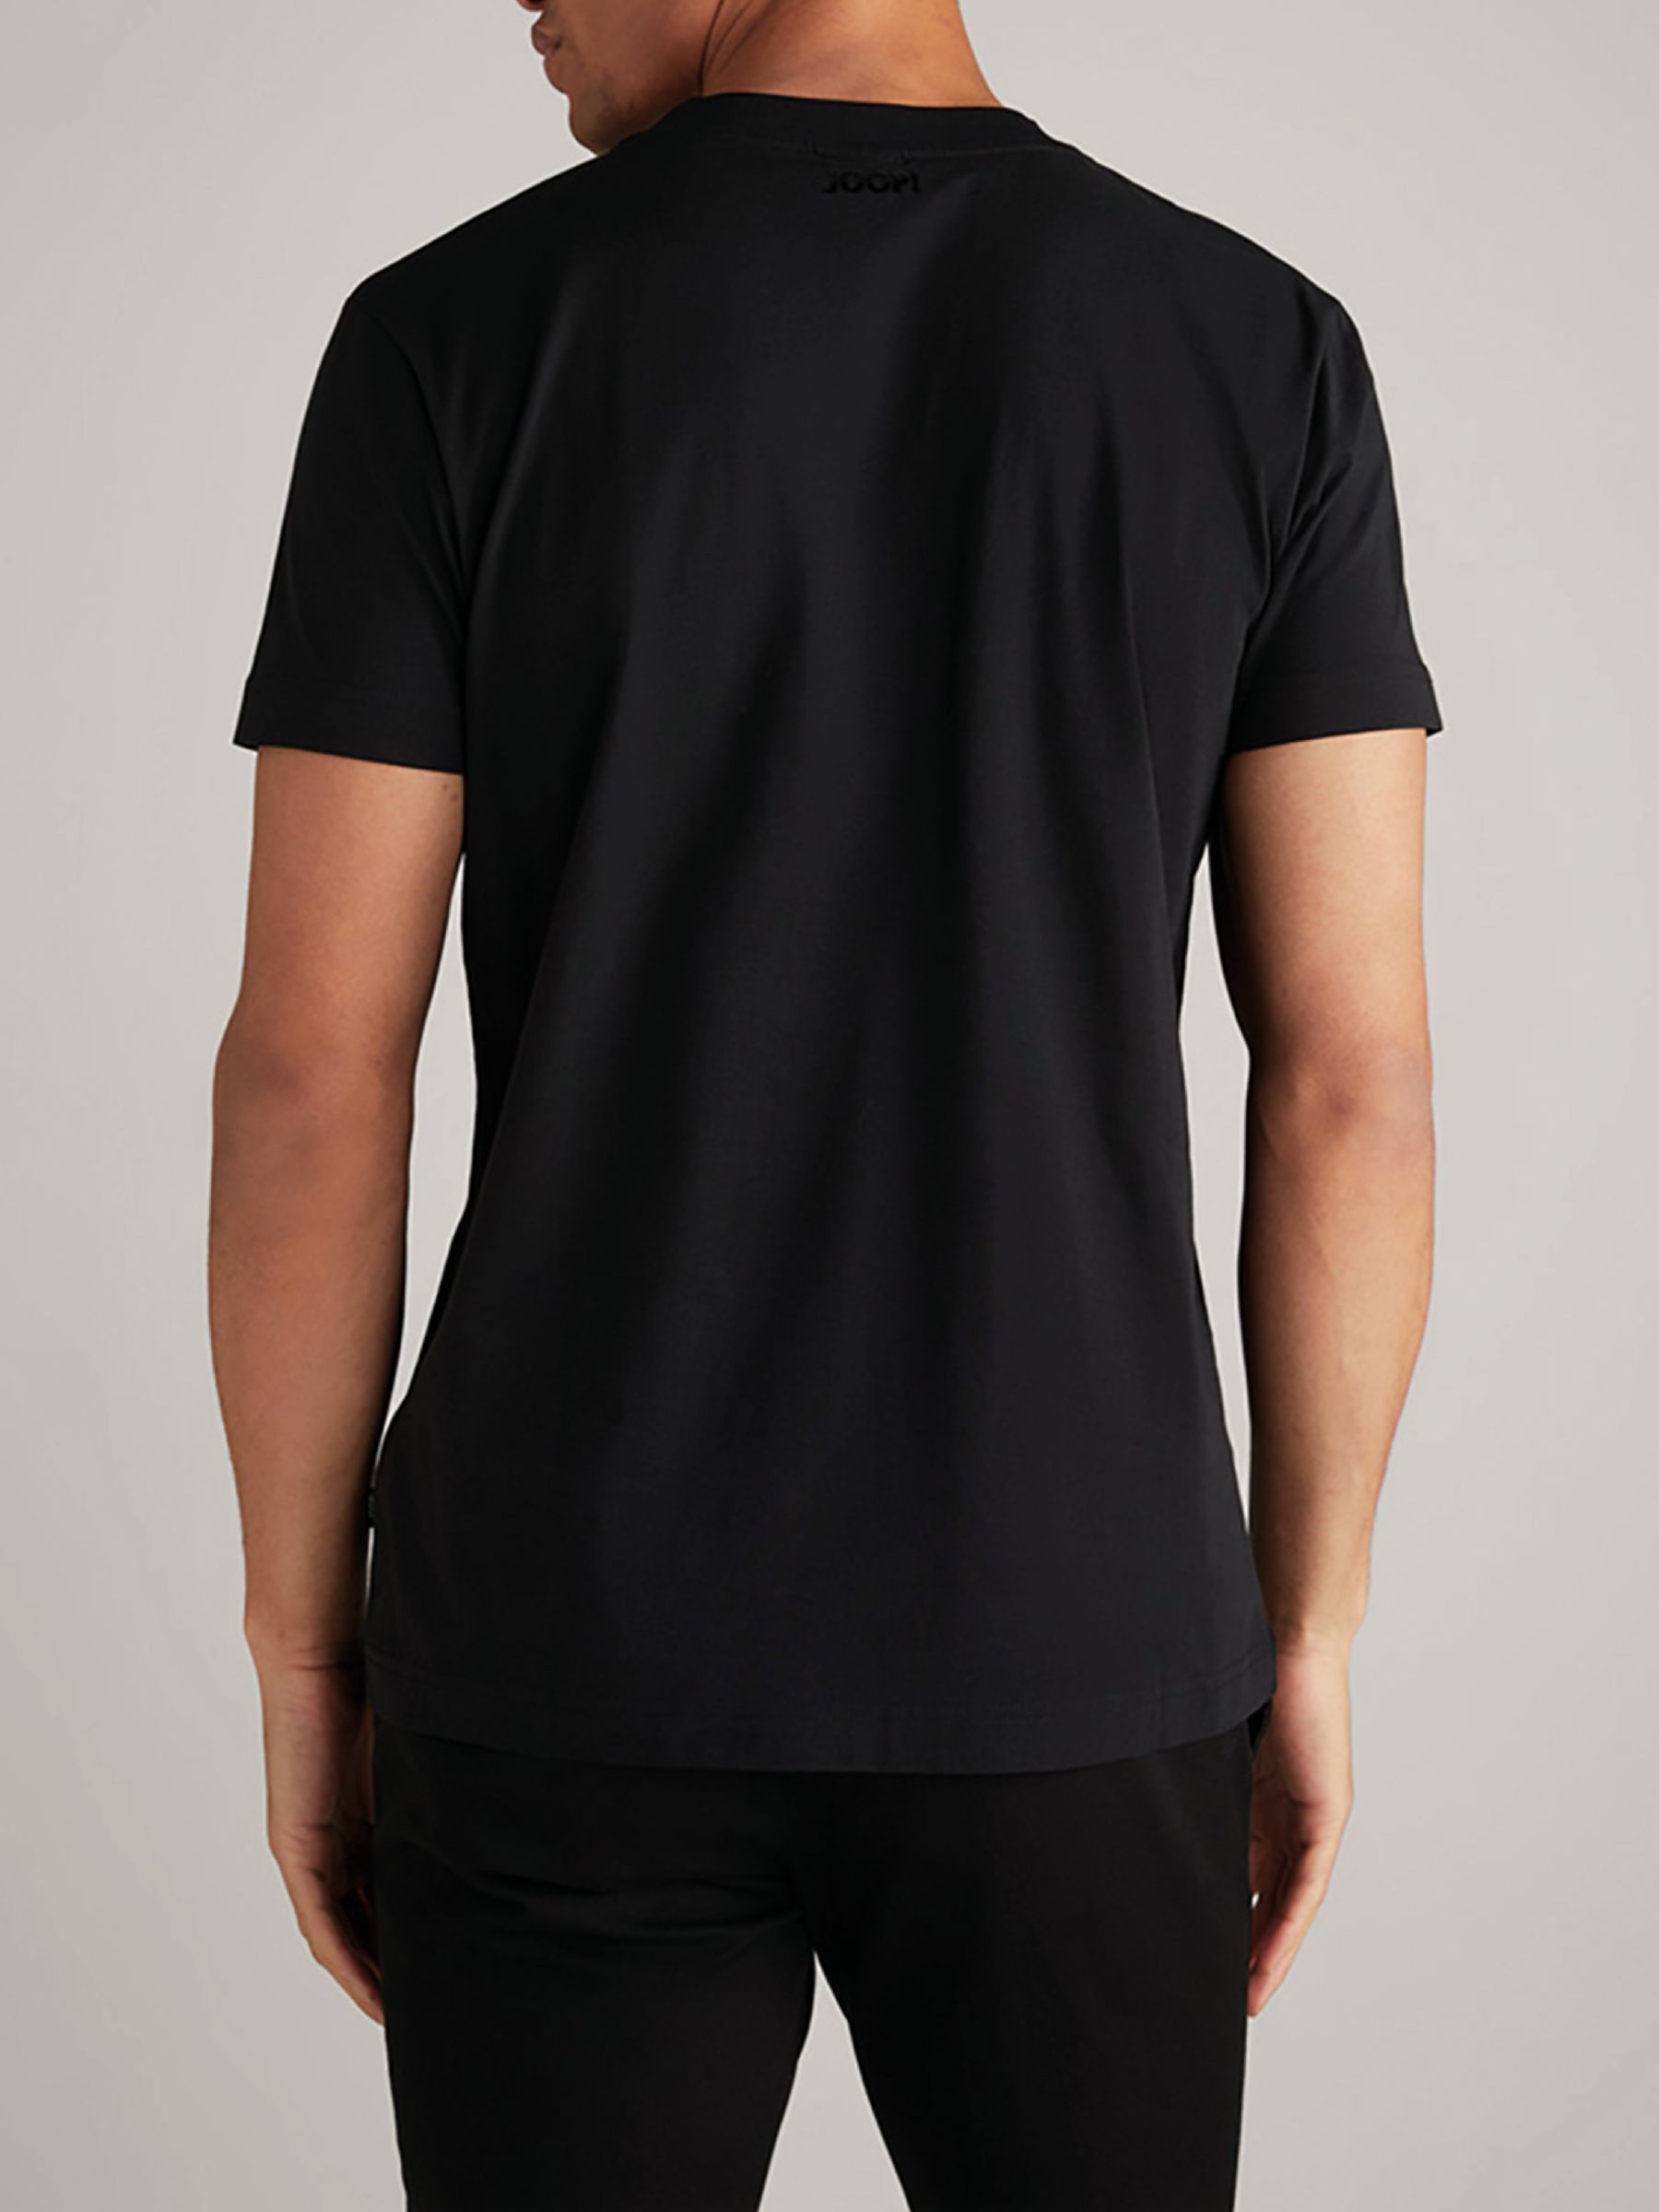 JOOP! Baptiste Short Sleeve T-shirt, Black, S